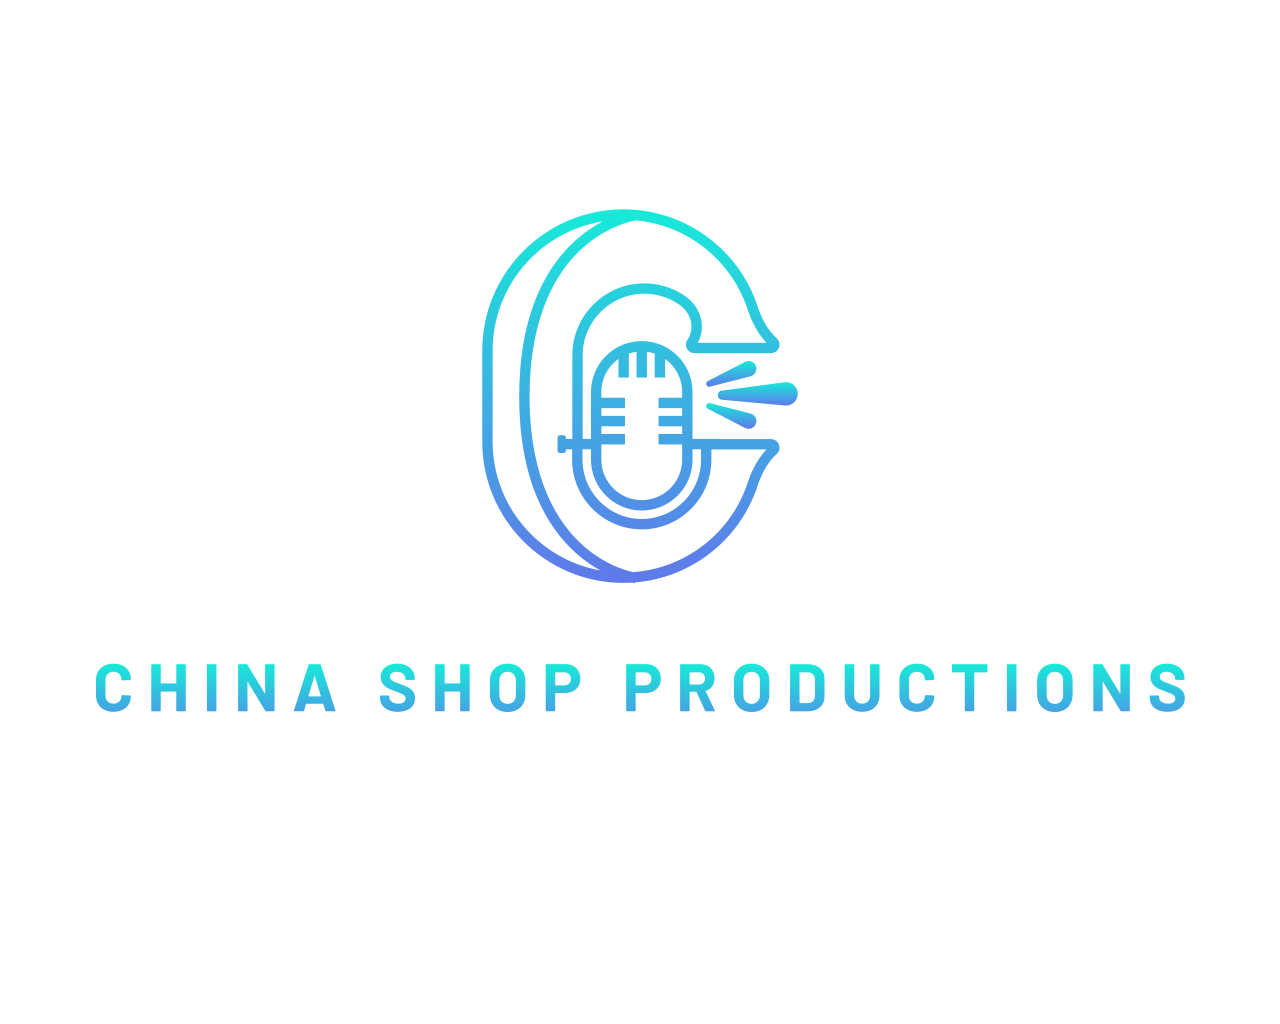 China Shop Productions